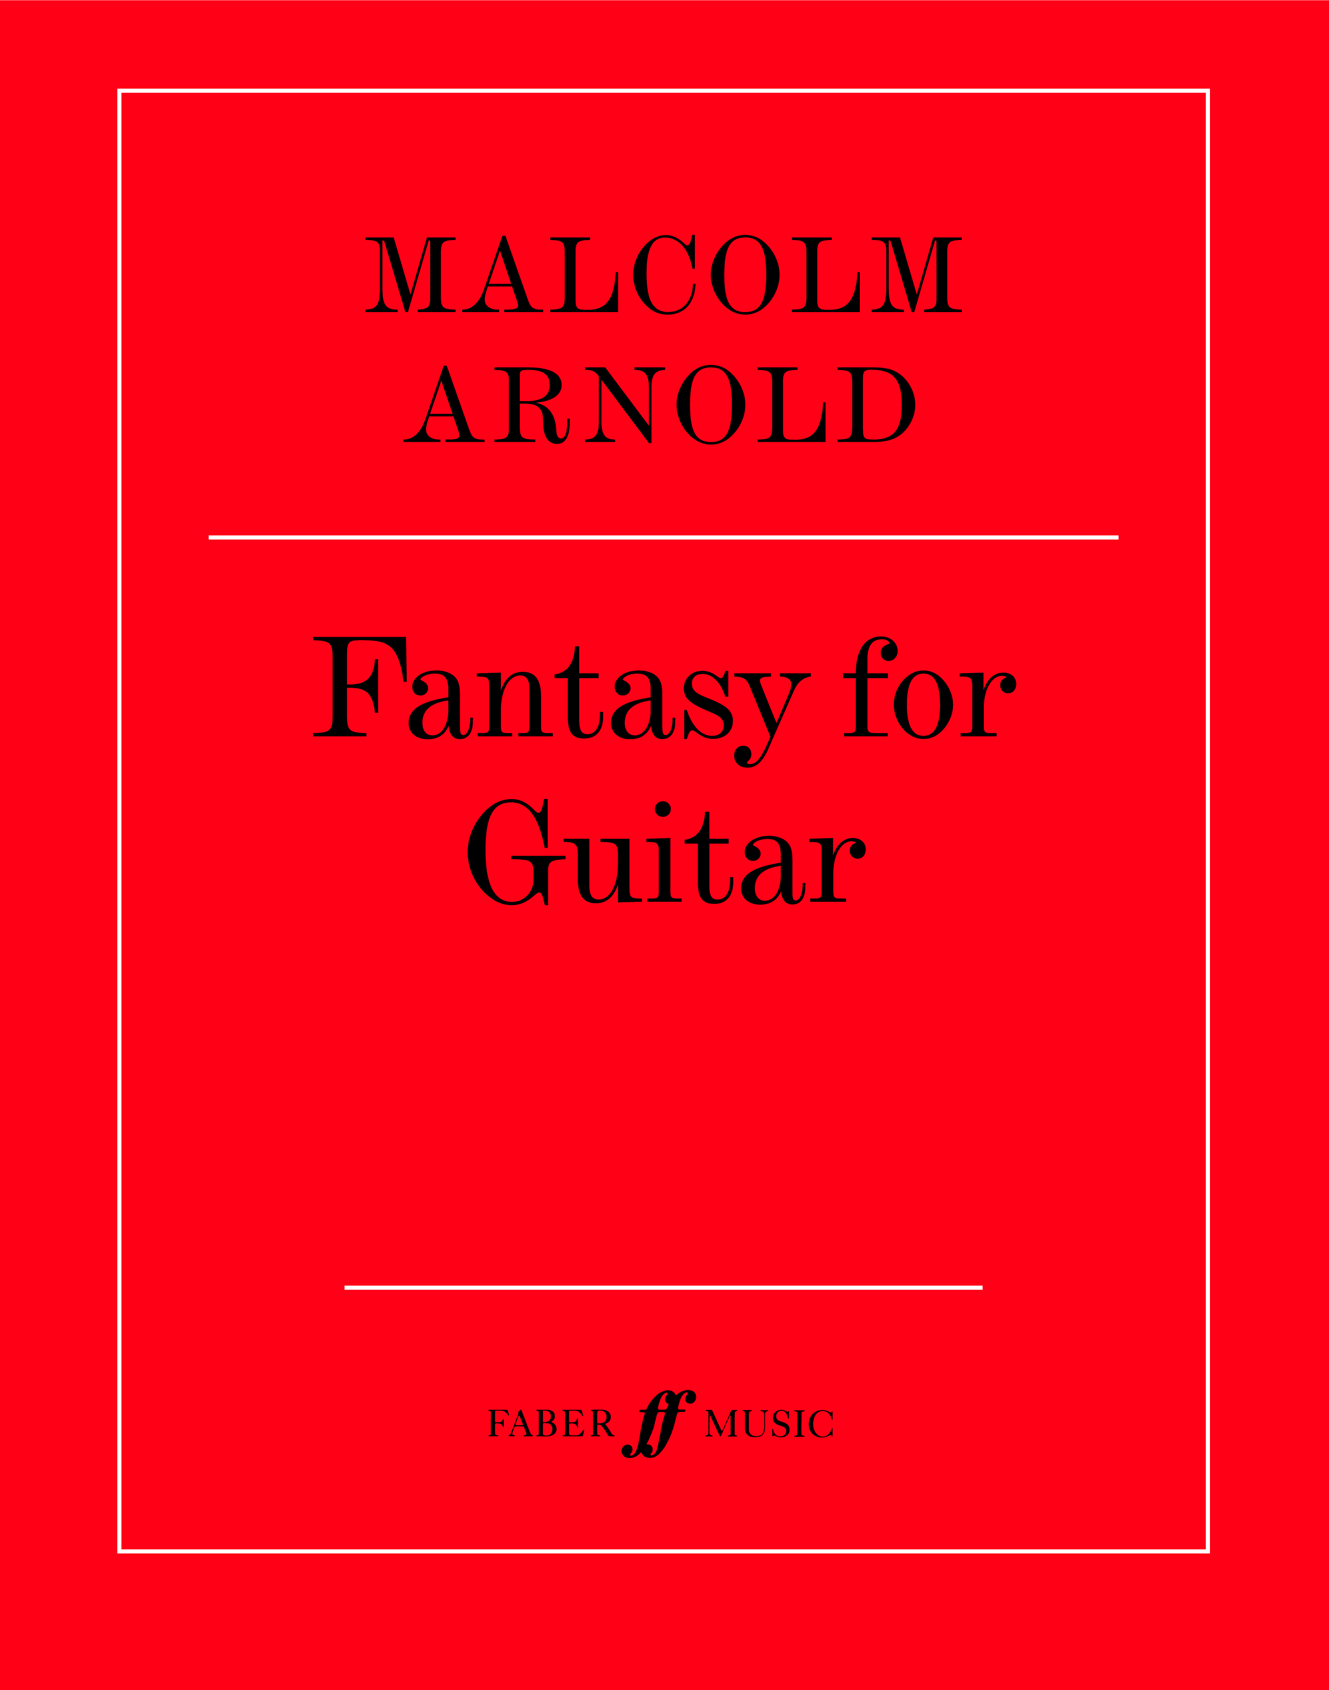 Fantasy for Guitar (ARNOLD MALCOLM)